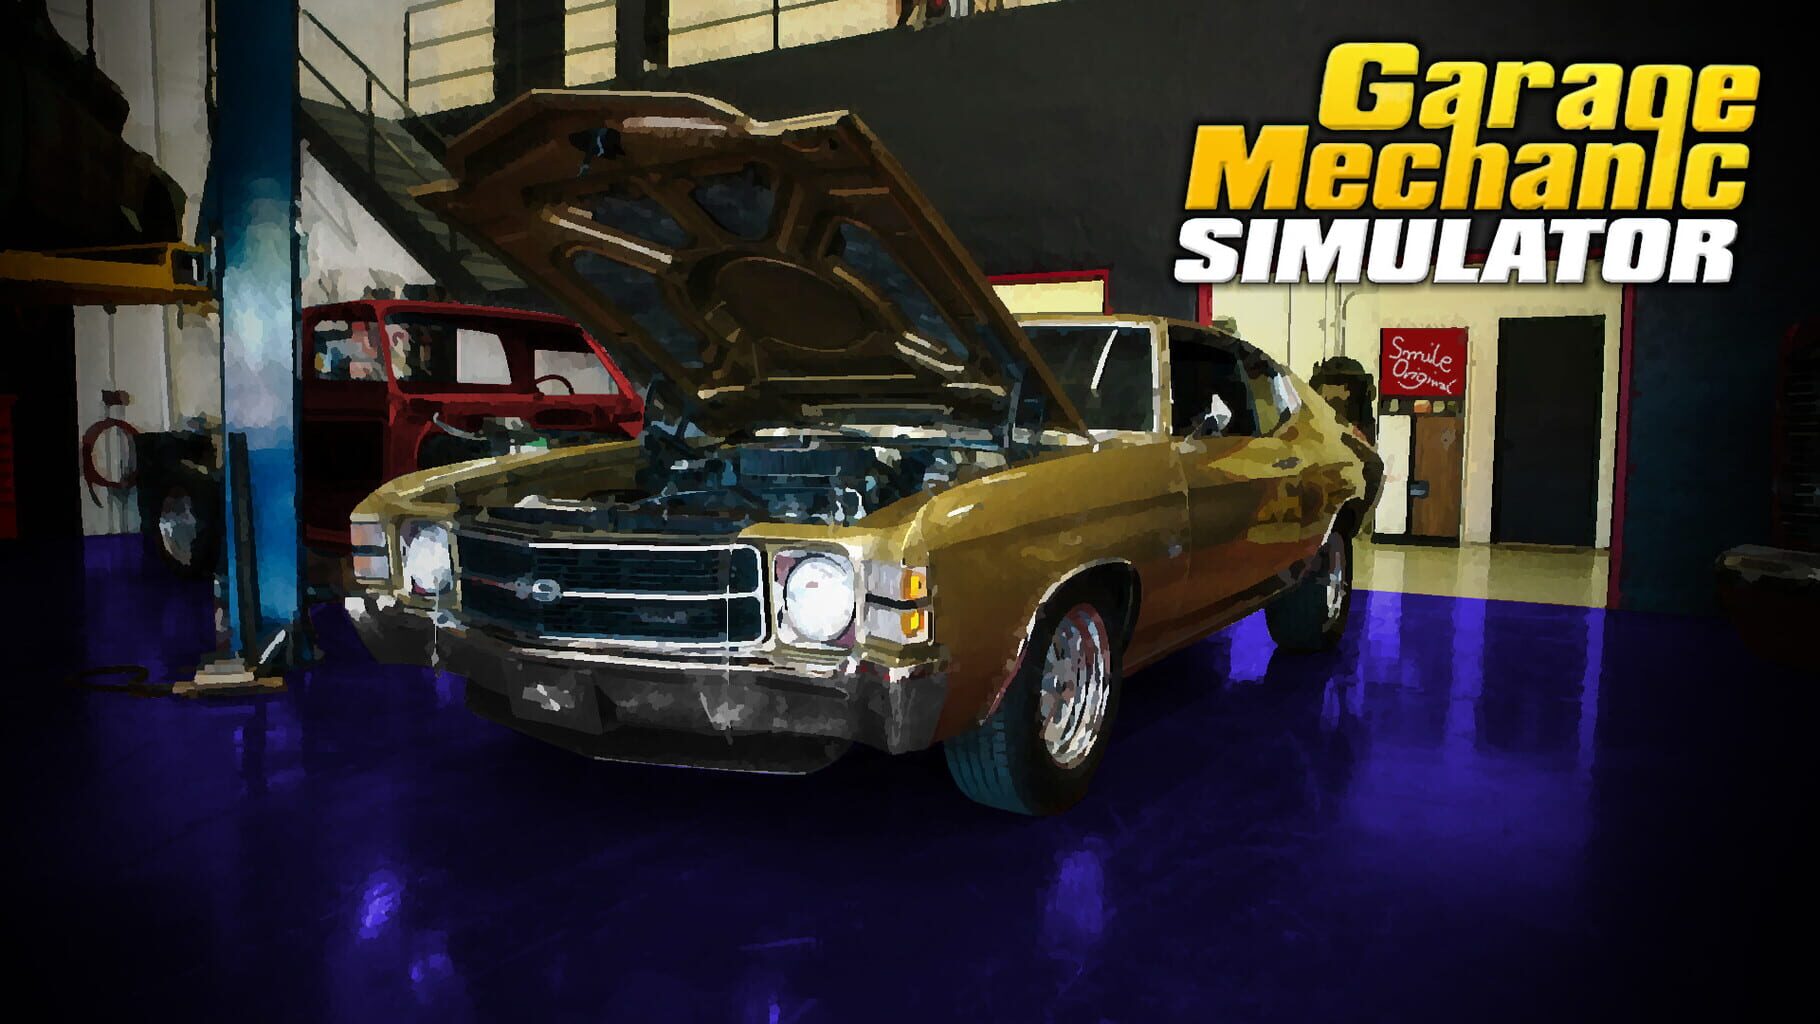 Garage Mechanic Simulator artwork